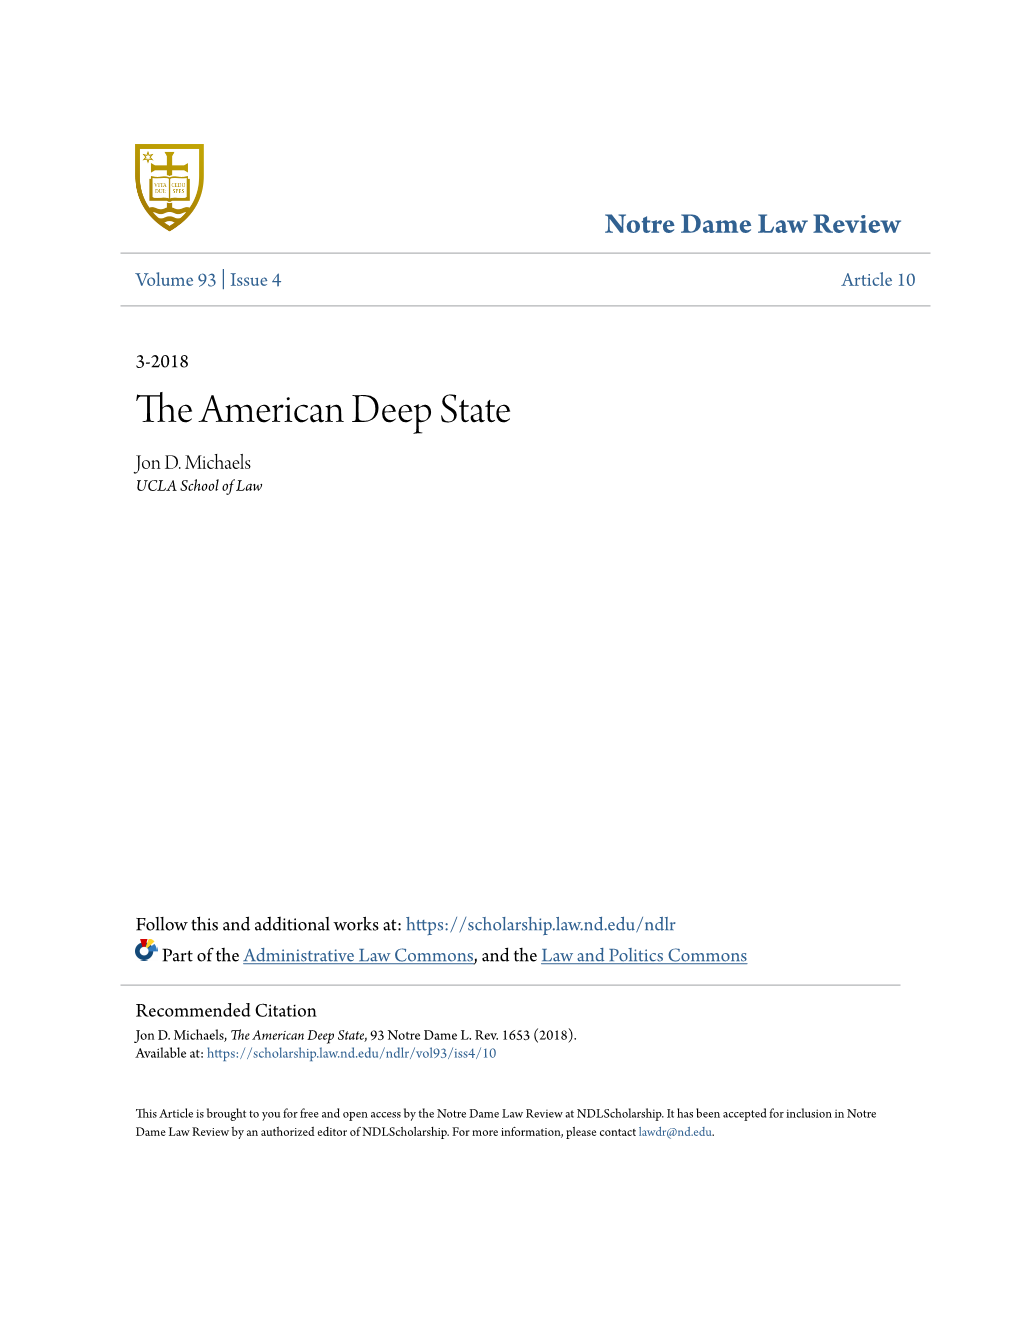 The American Deep State Jon D